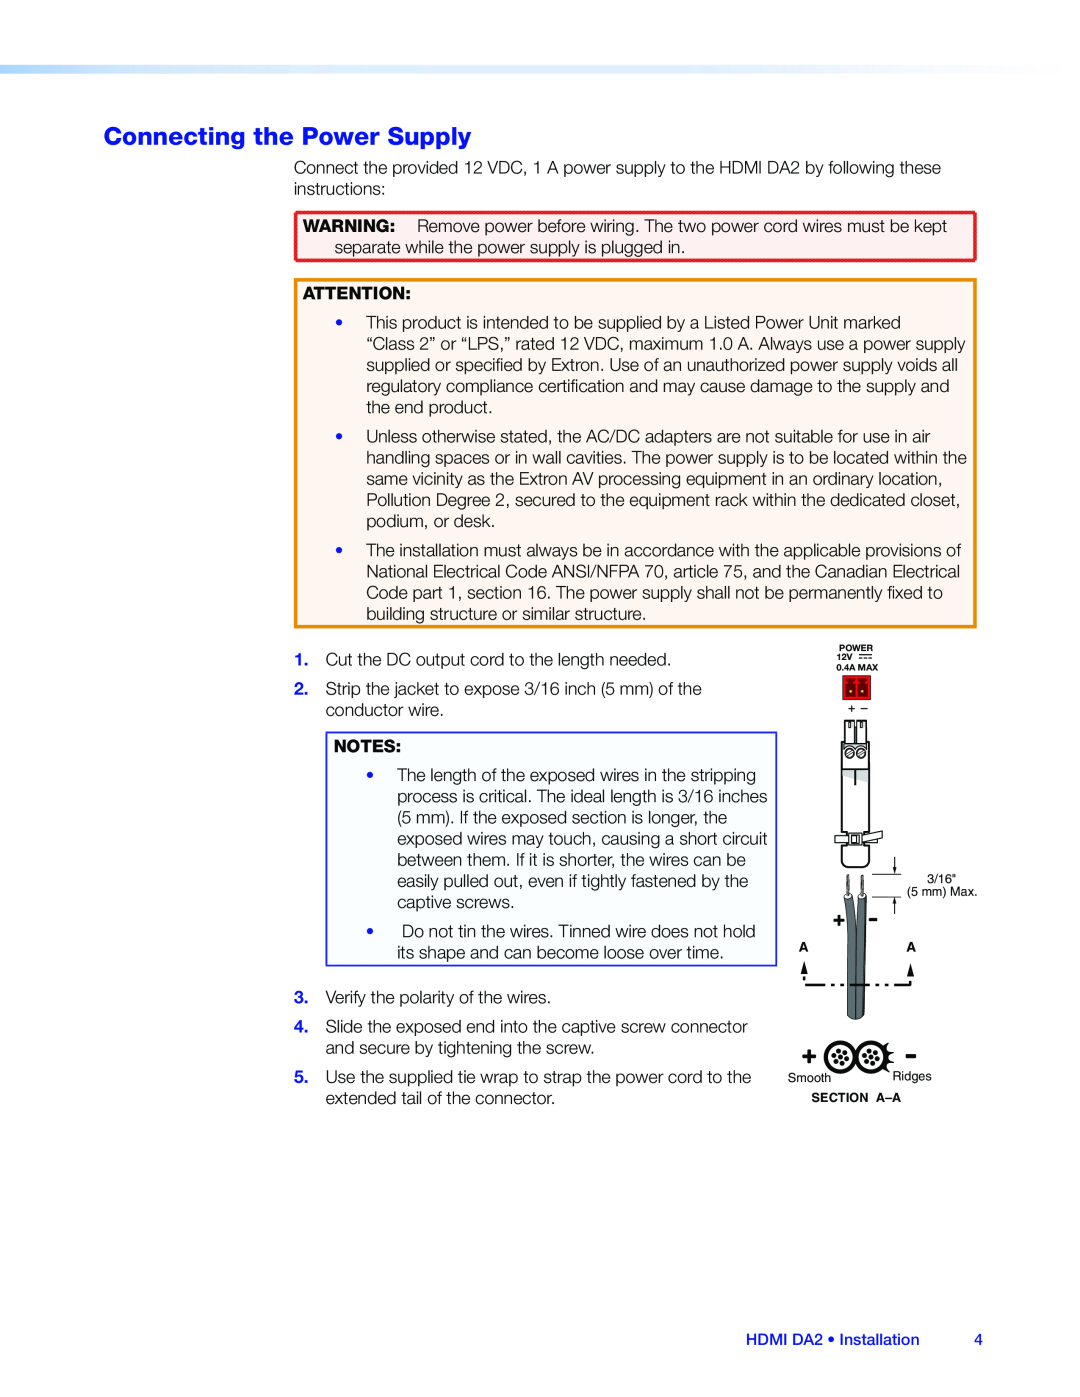 Extron electronic HDMI DA2 manual Connecting the Power Supply 